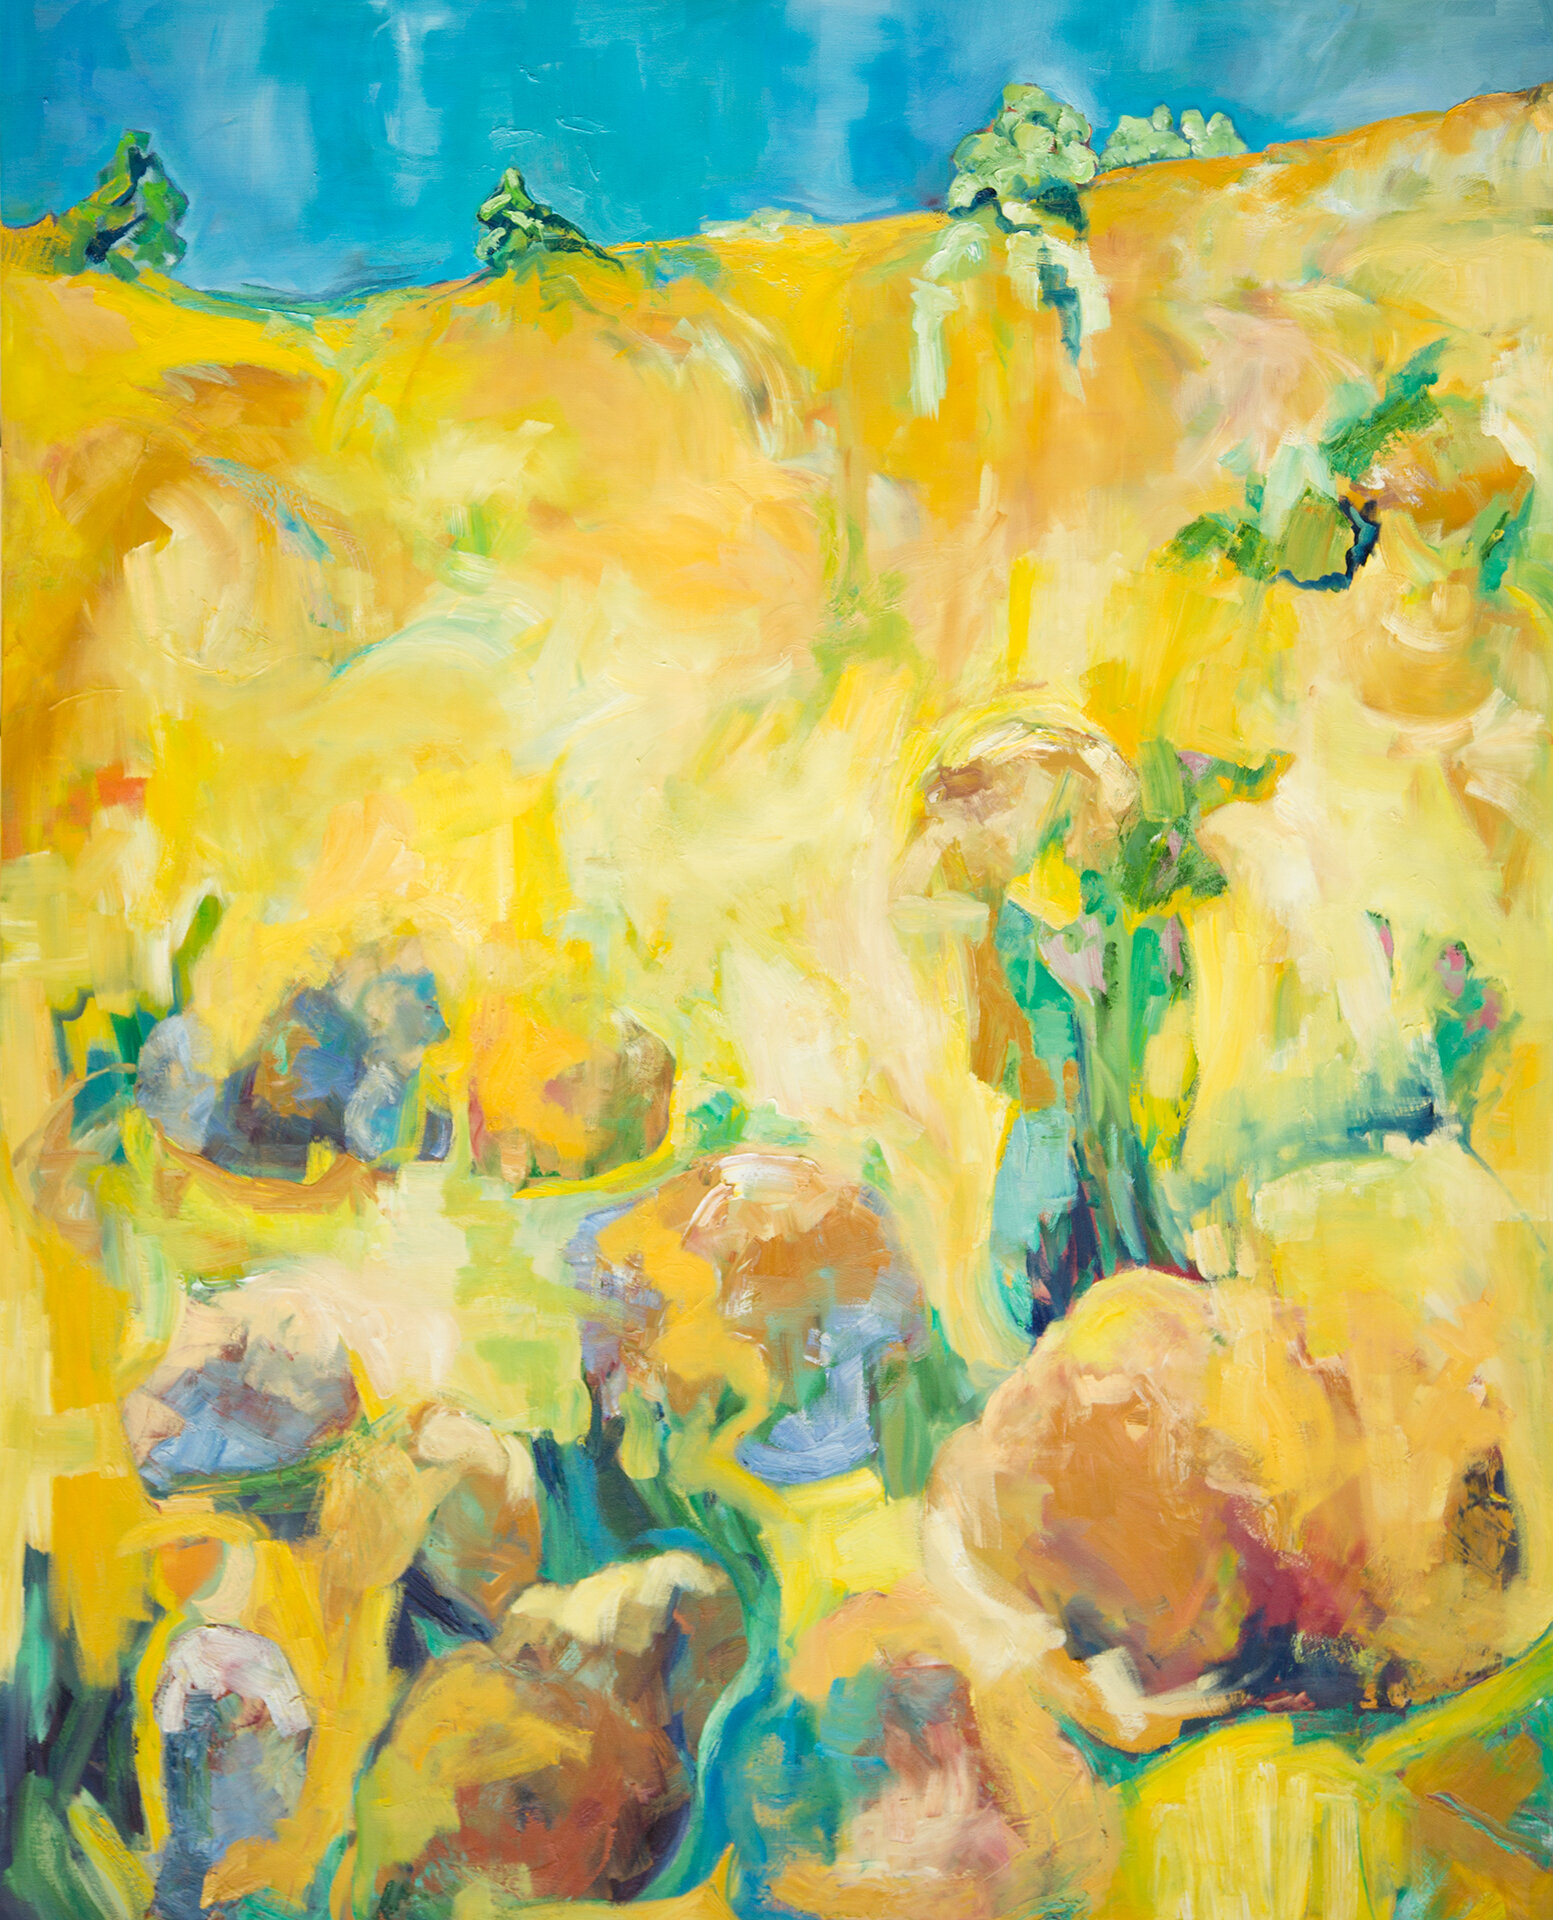 "Horizon", oil on canvas, 60 x 48"